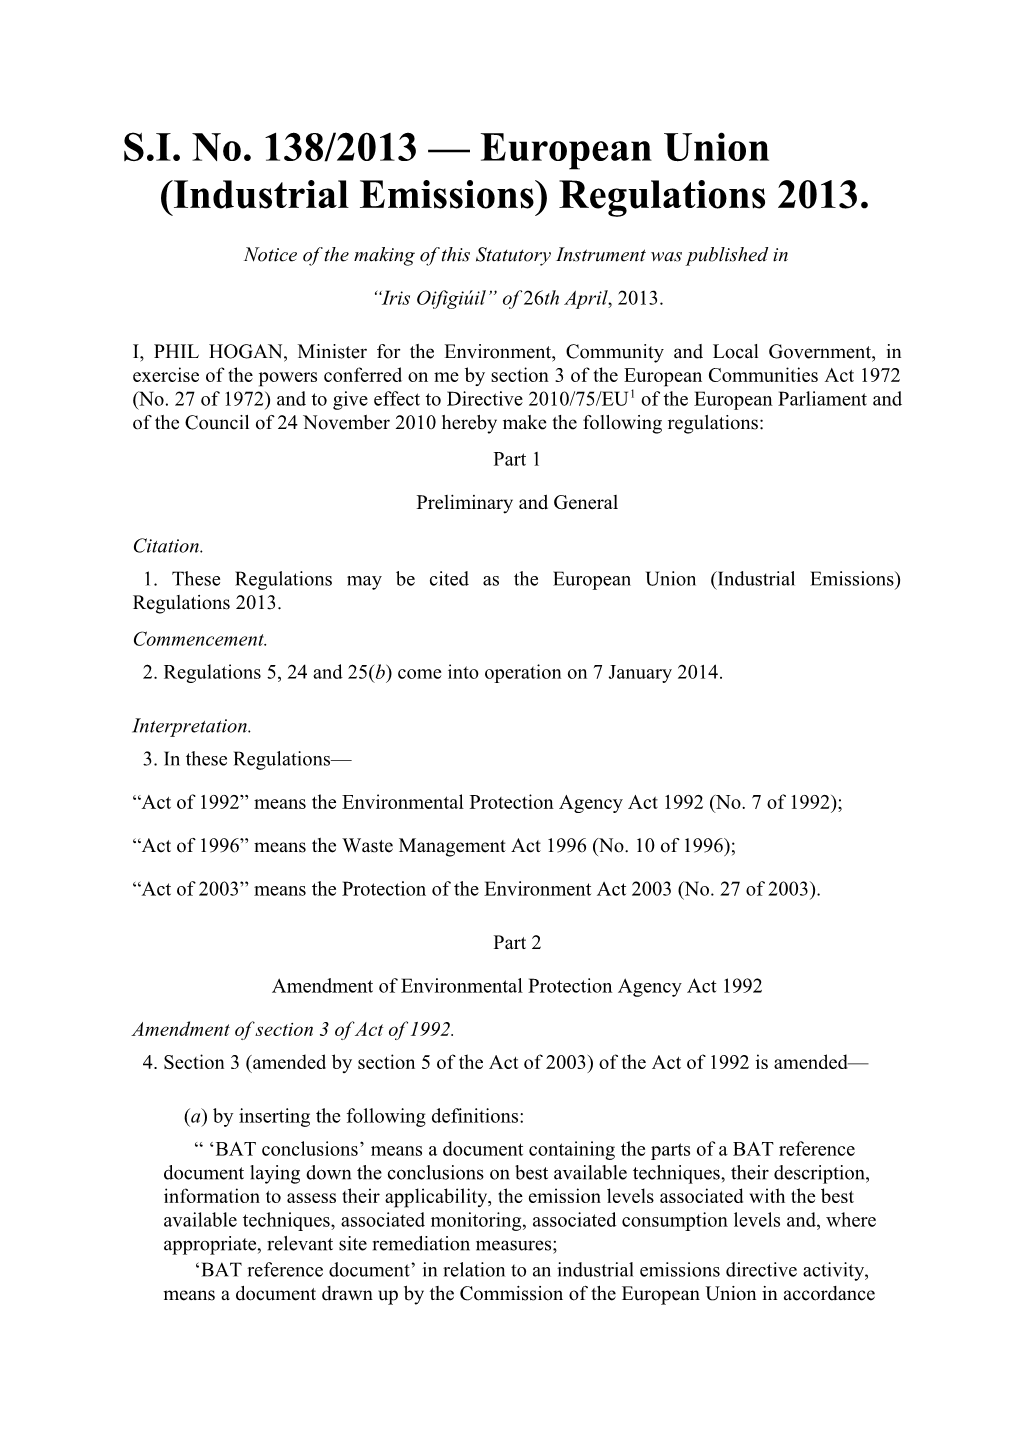 S.I. No. 138/2013 European Union (Industrial Emissions) Regulations 2013